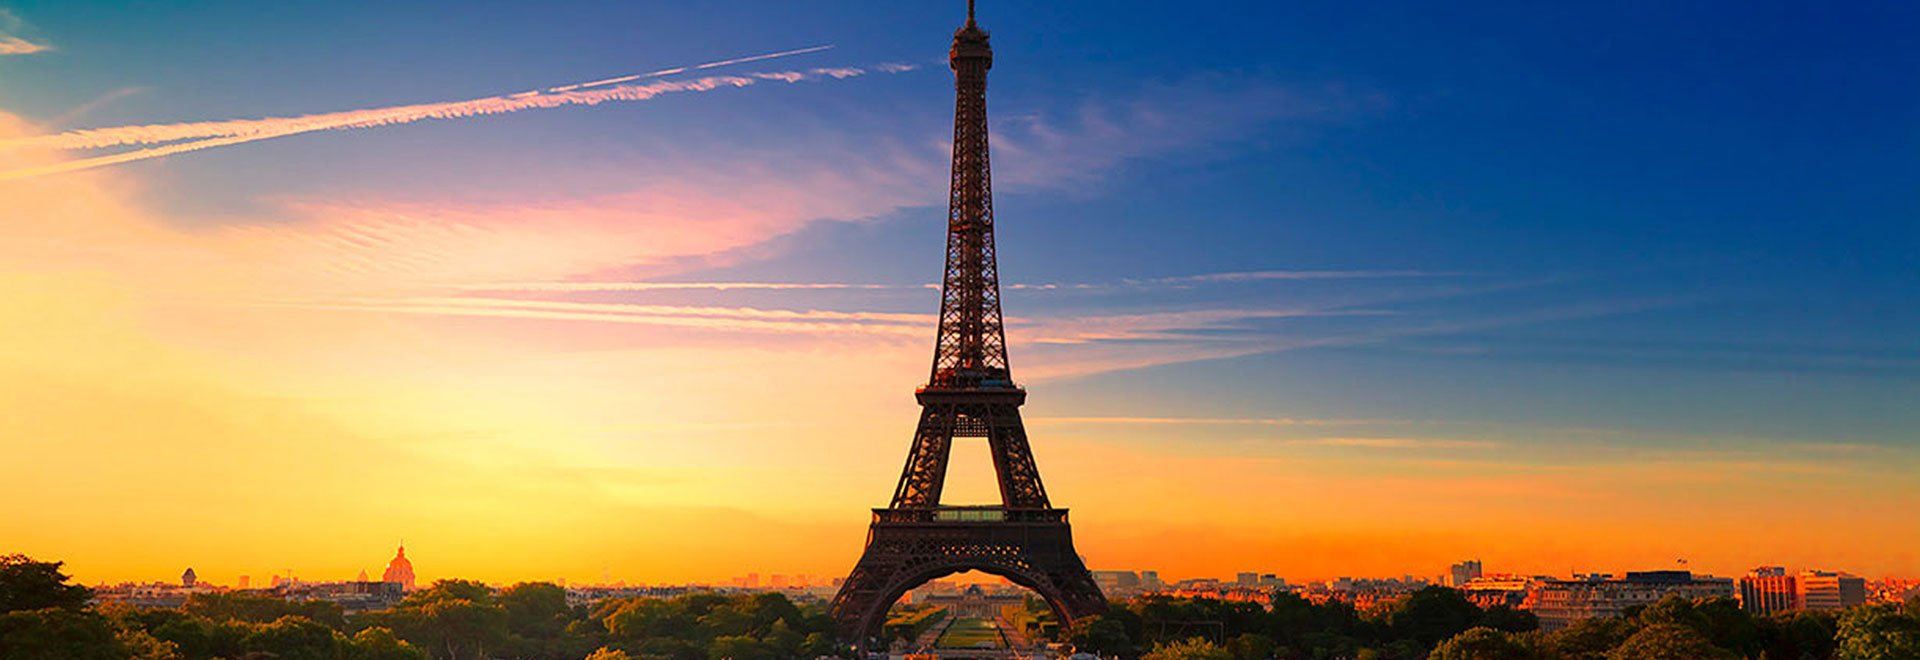 Europe, France, Eiffel Tower